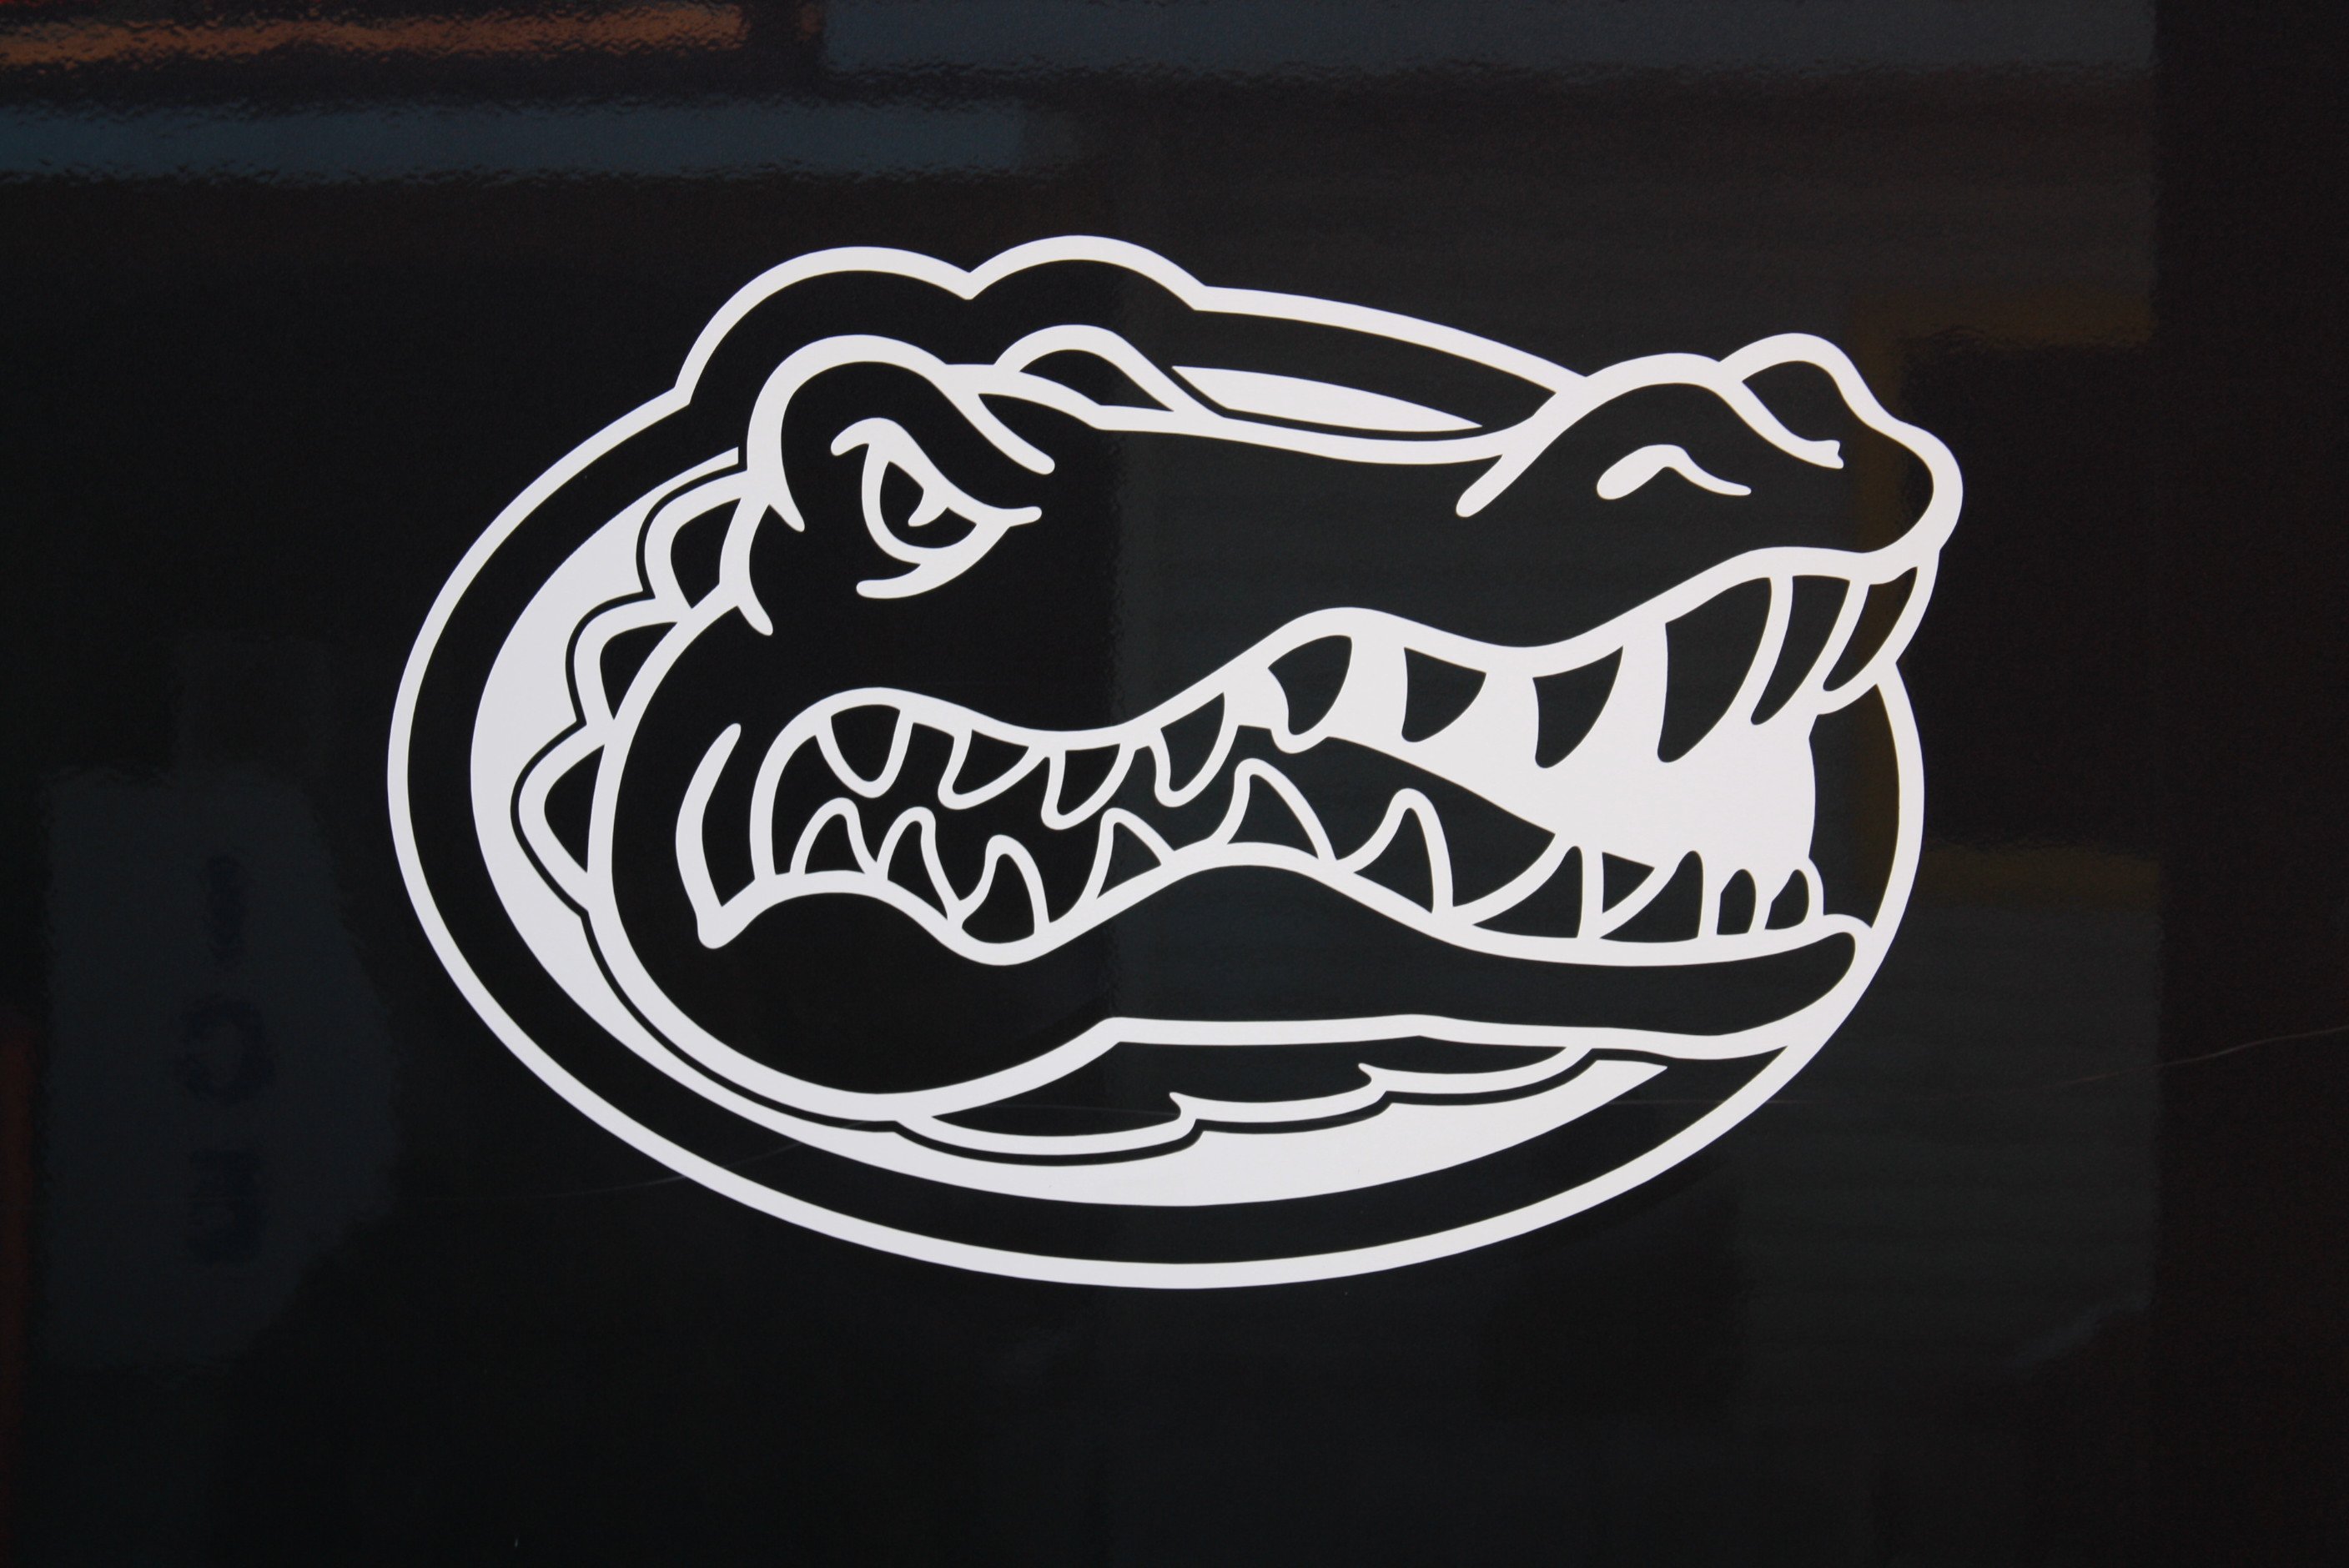 Florida Gators College Football Wallpaper